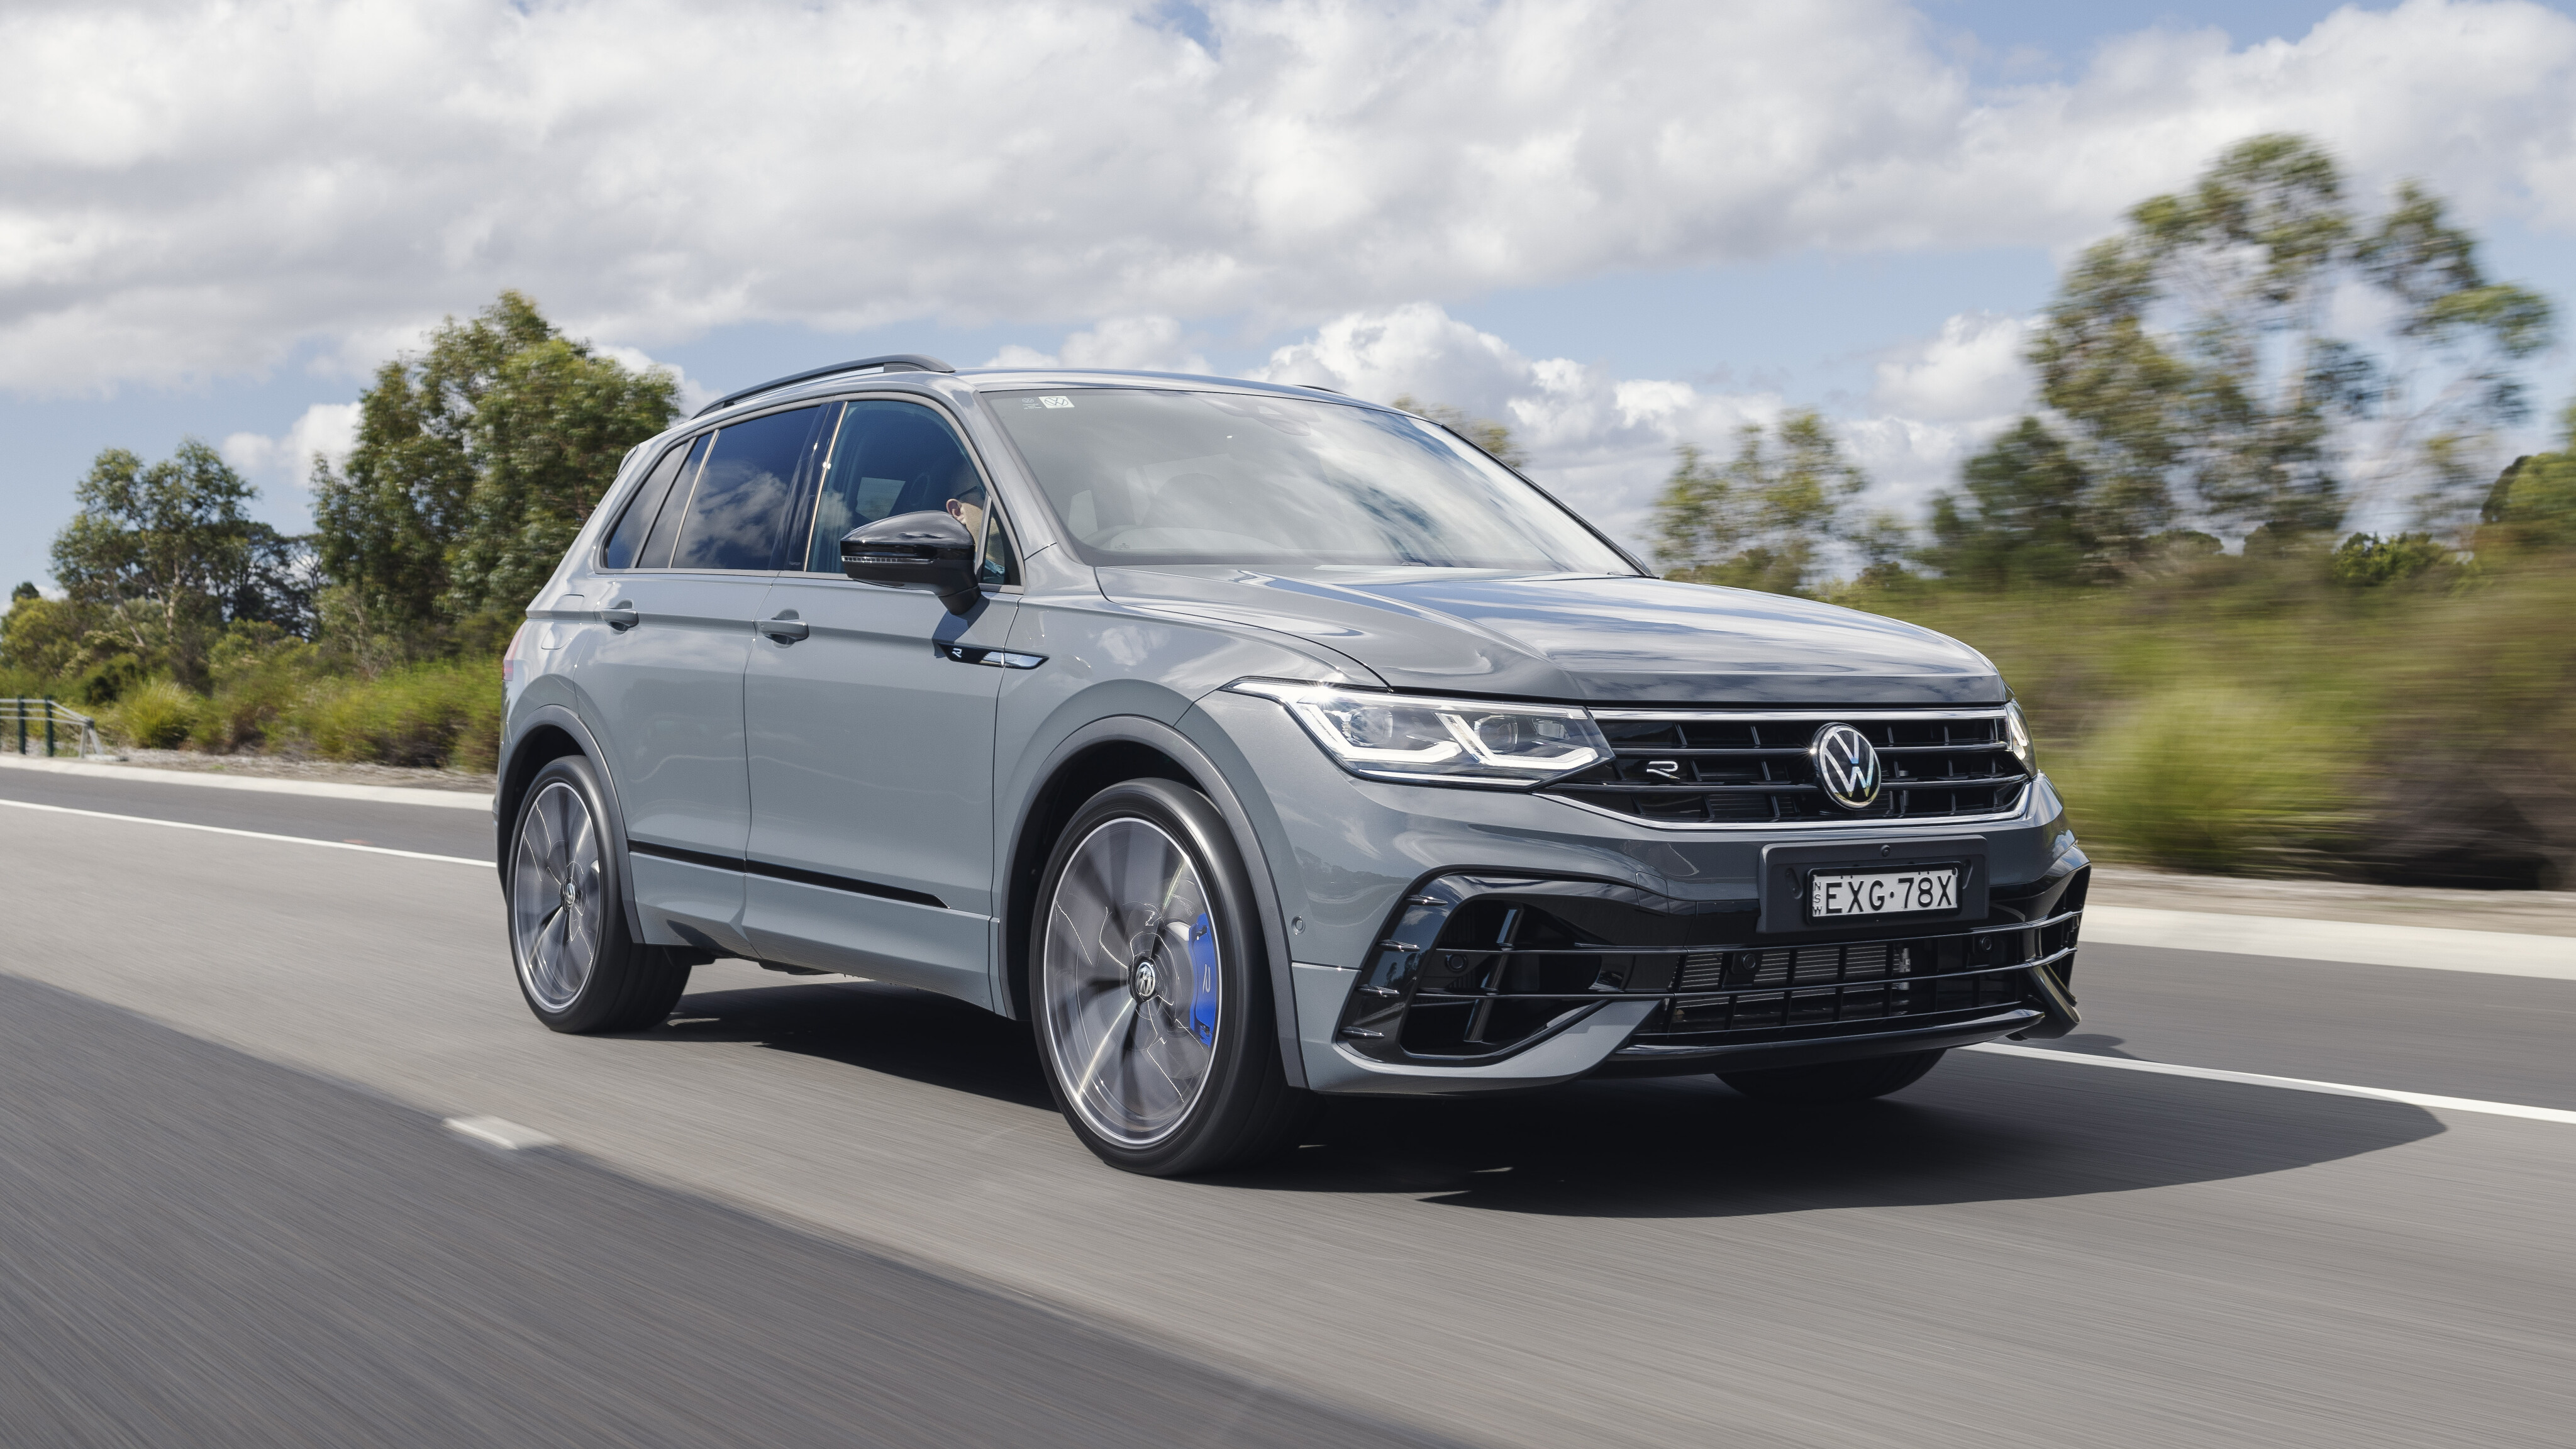 2023 Volkswagen Tiguan review: Full range detailed